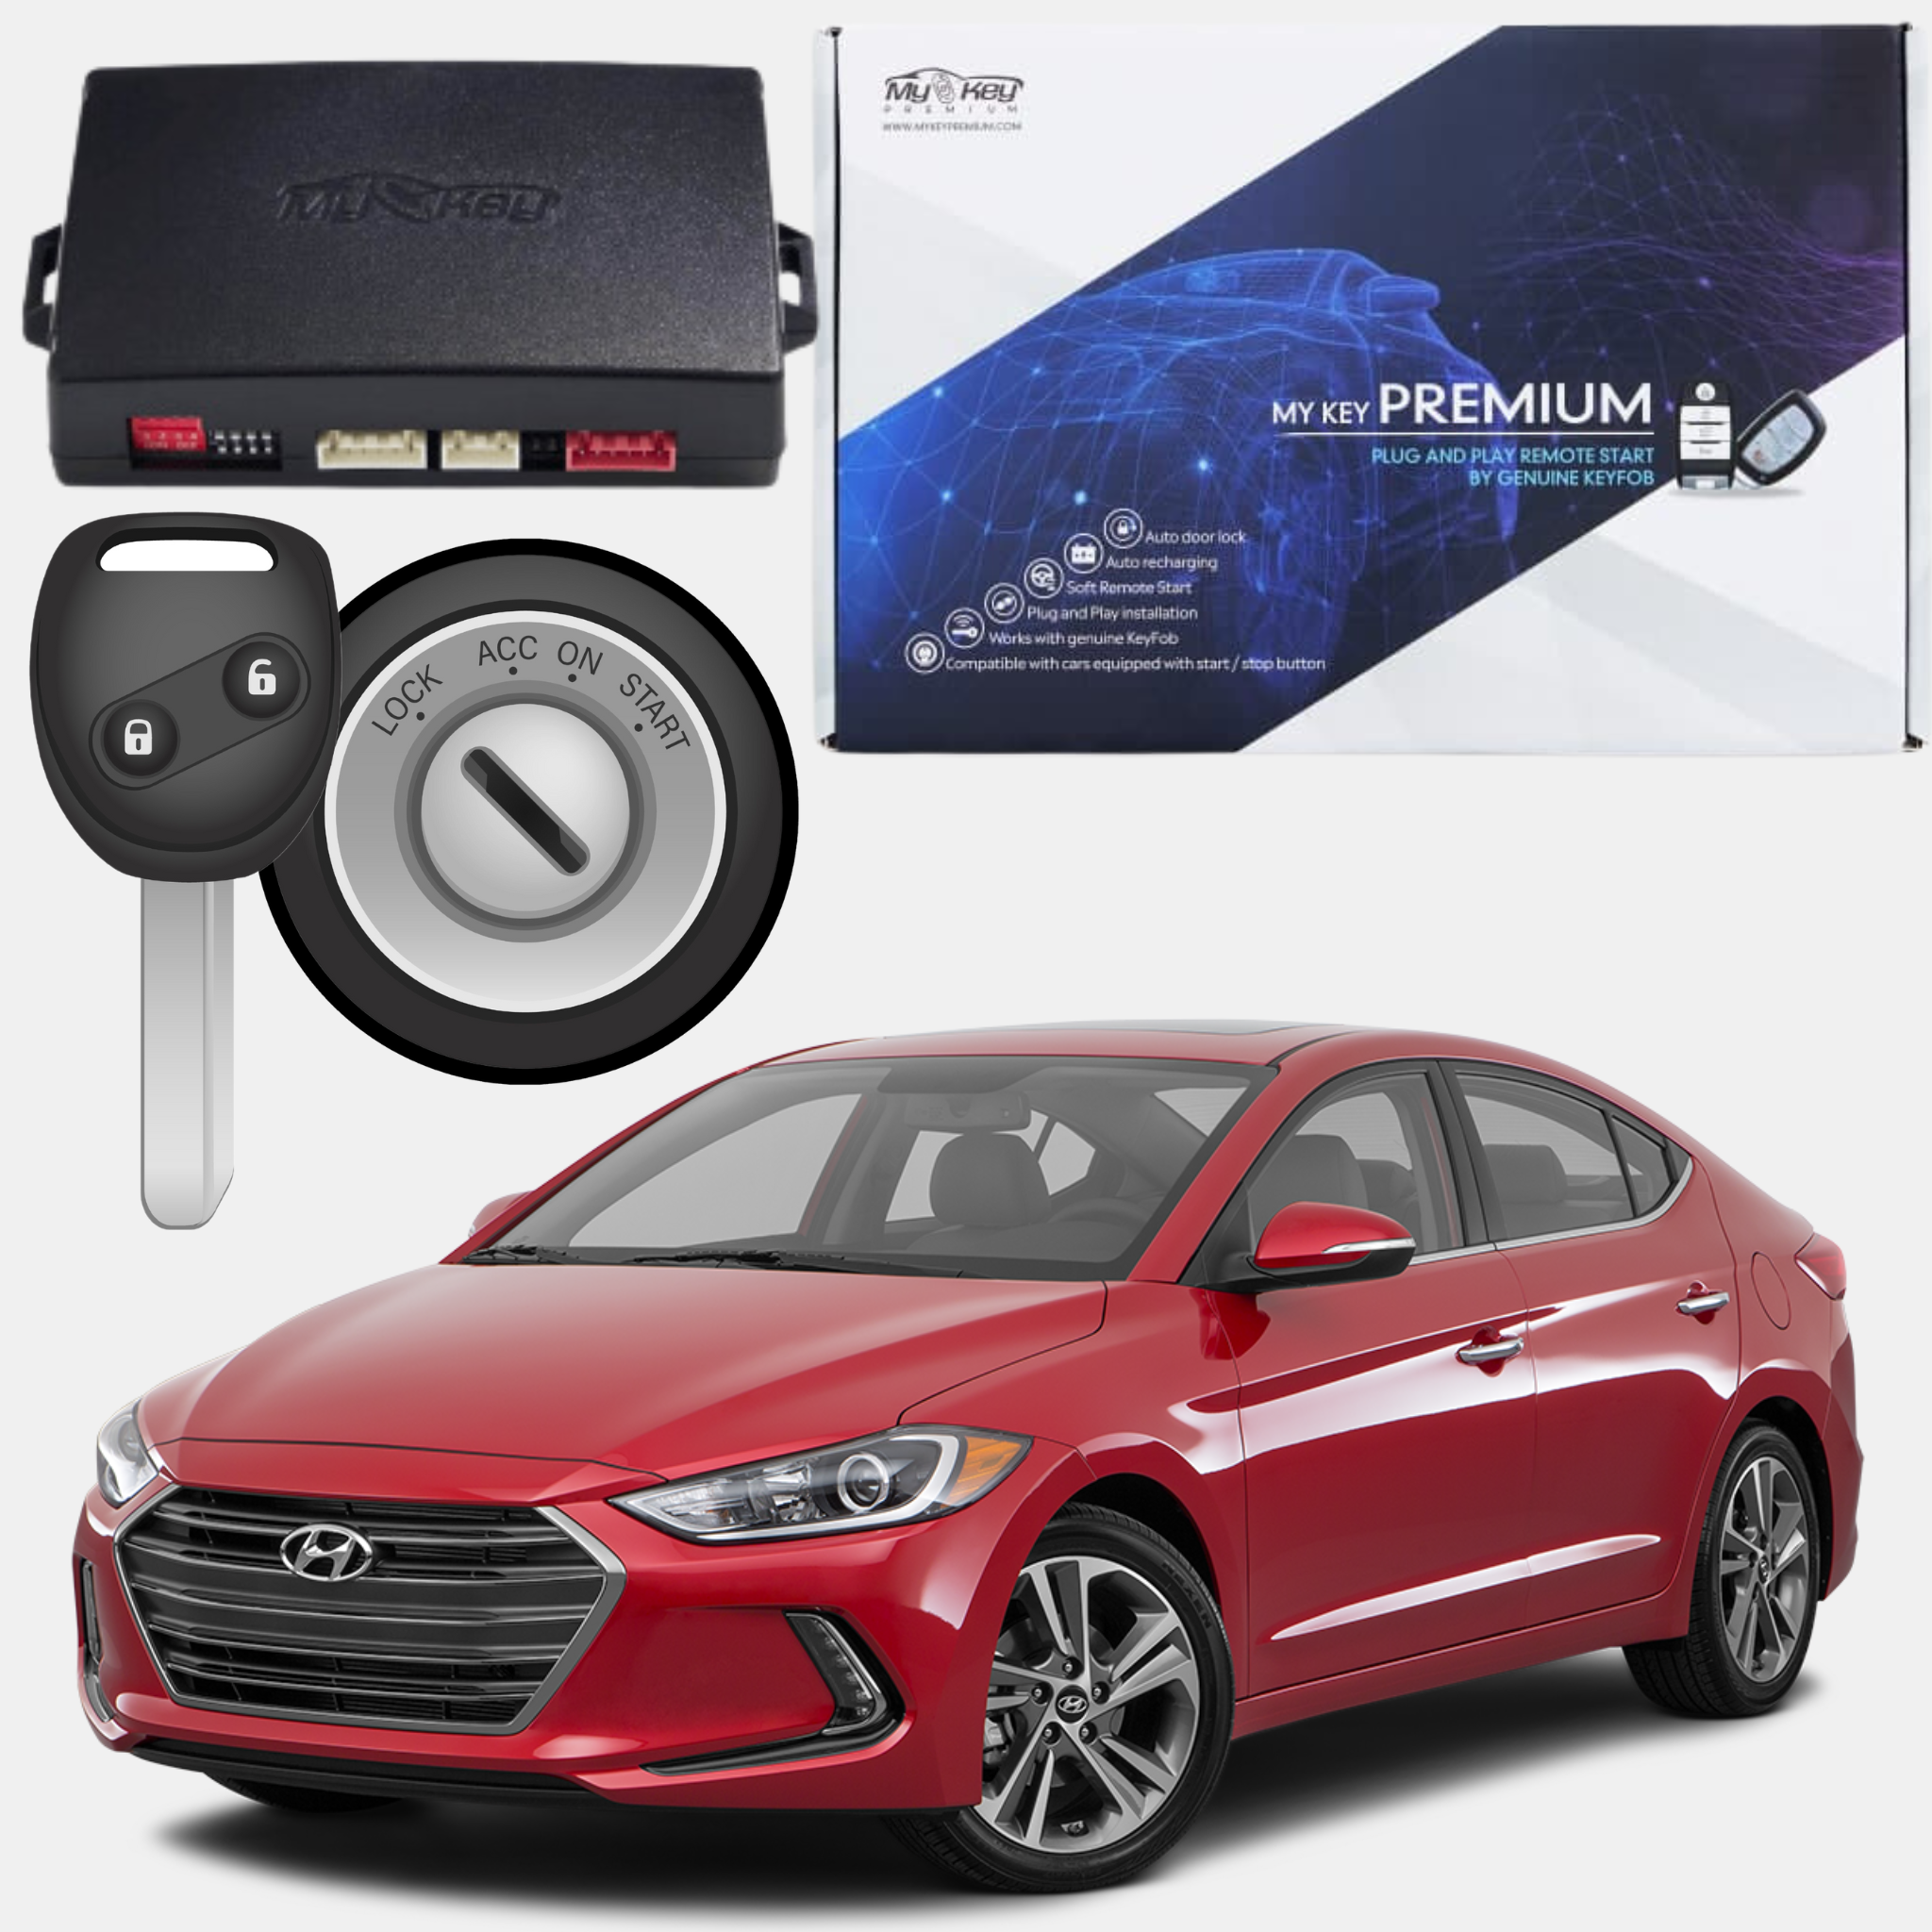 Hyundai elantra 2017~2019 AD Remote Engine Auto STARTER KIT for key ignition [MyKey Premium]]